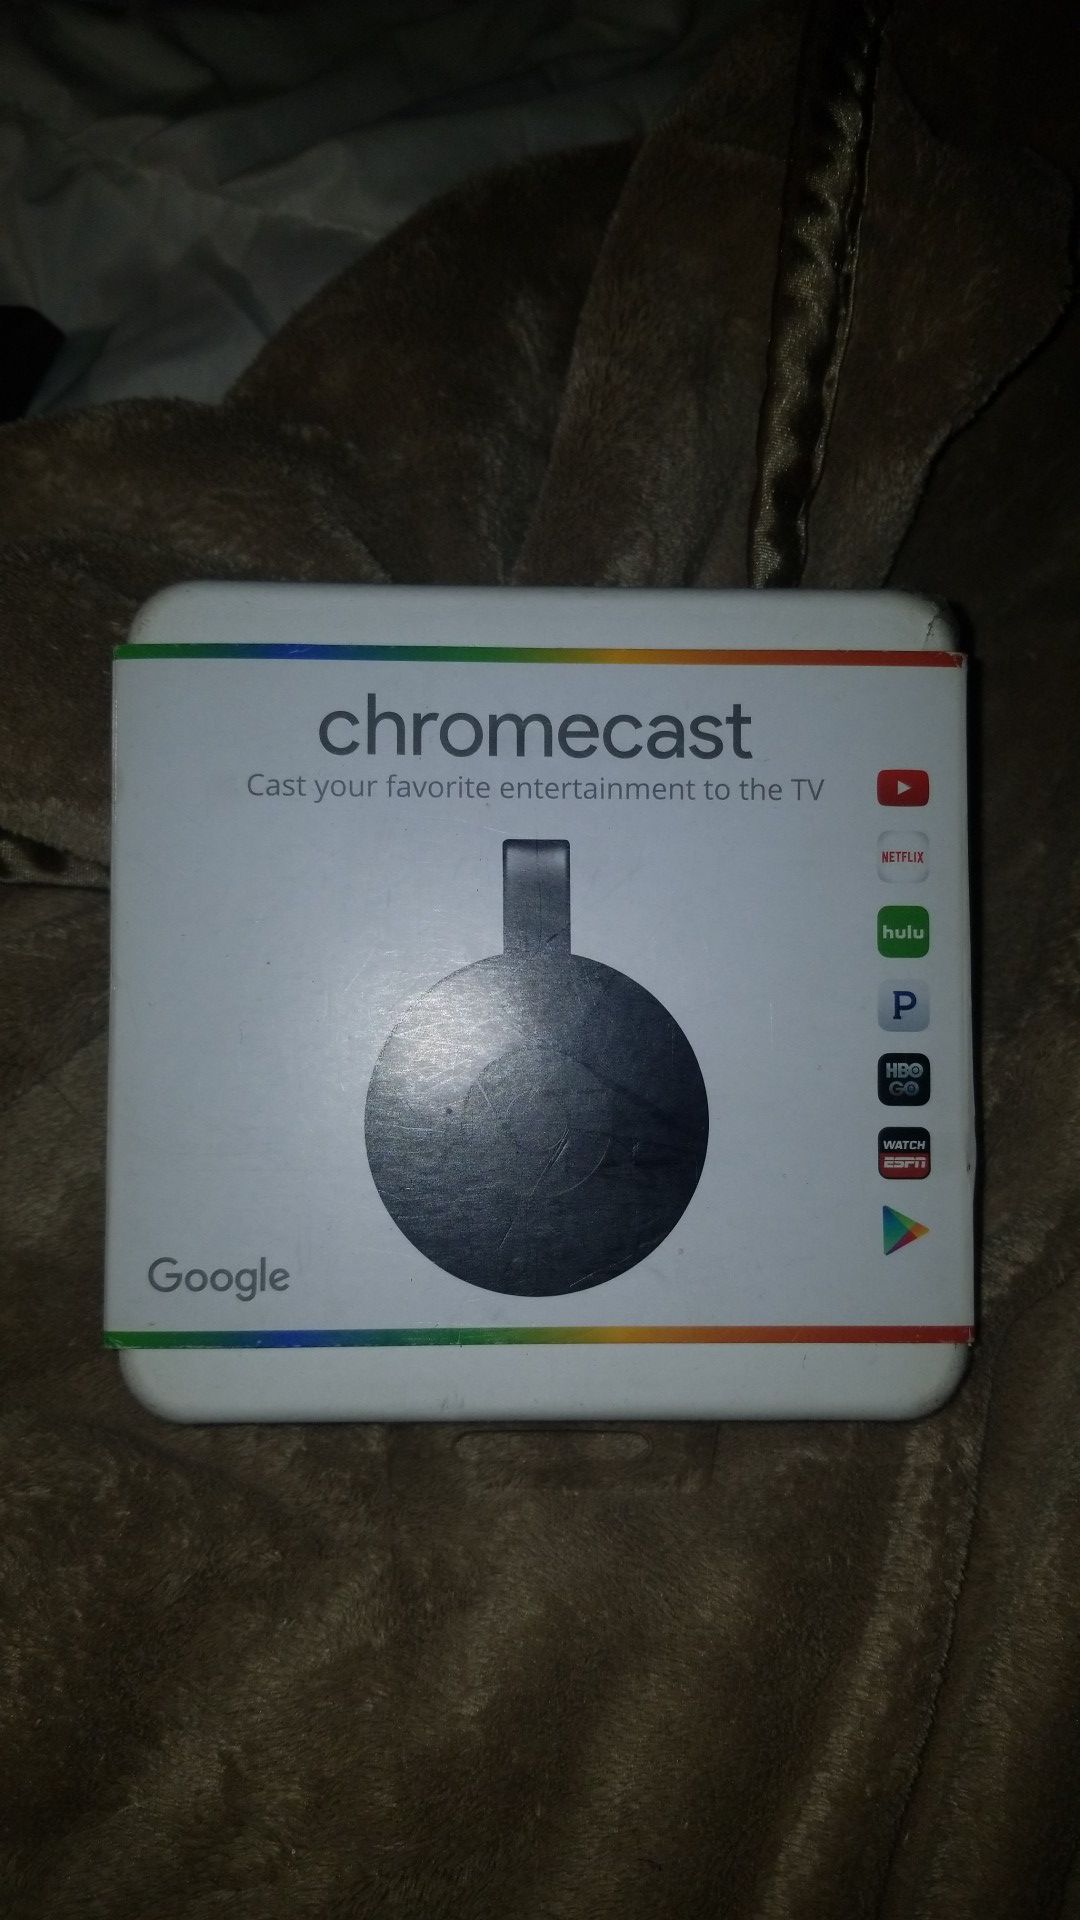 Google Chromecast. Unopened in original packaging